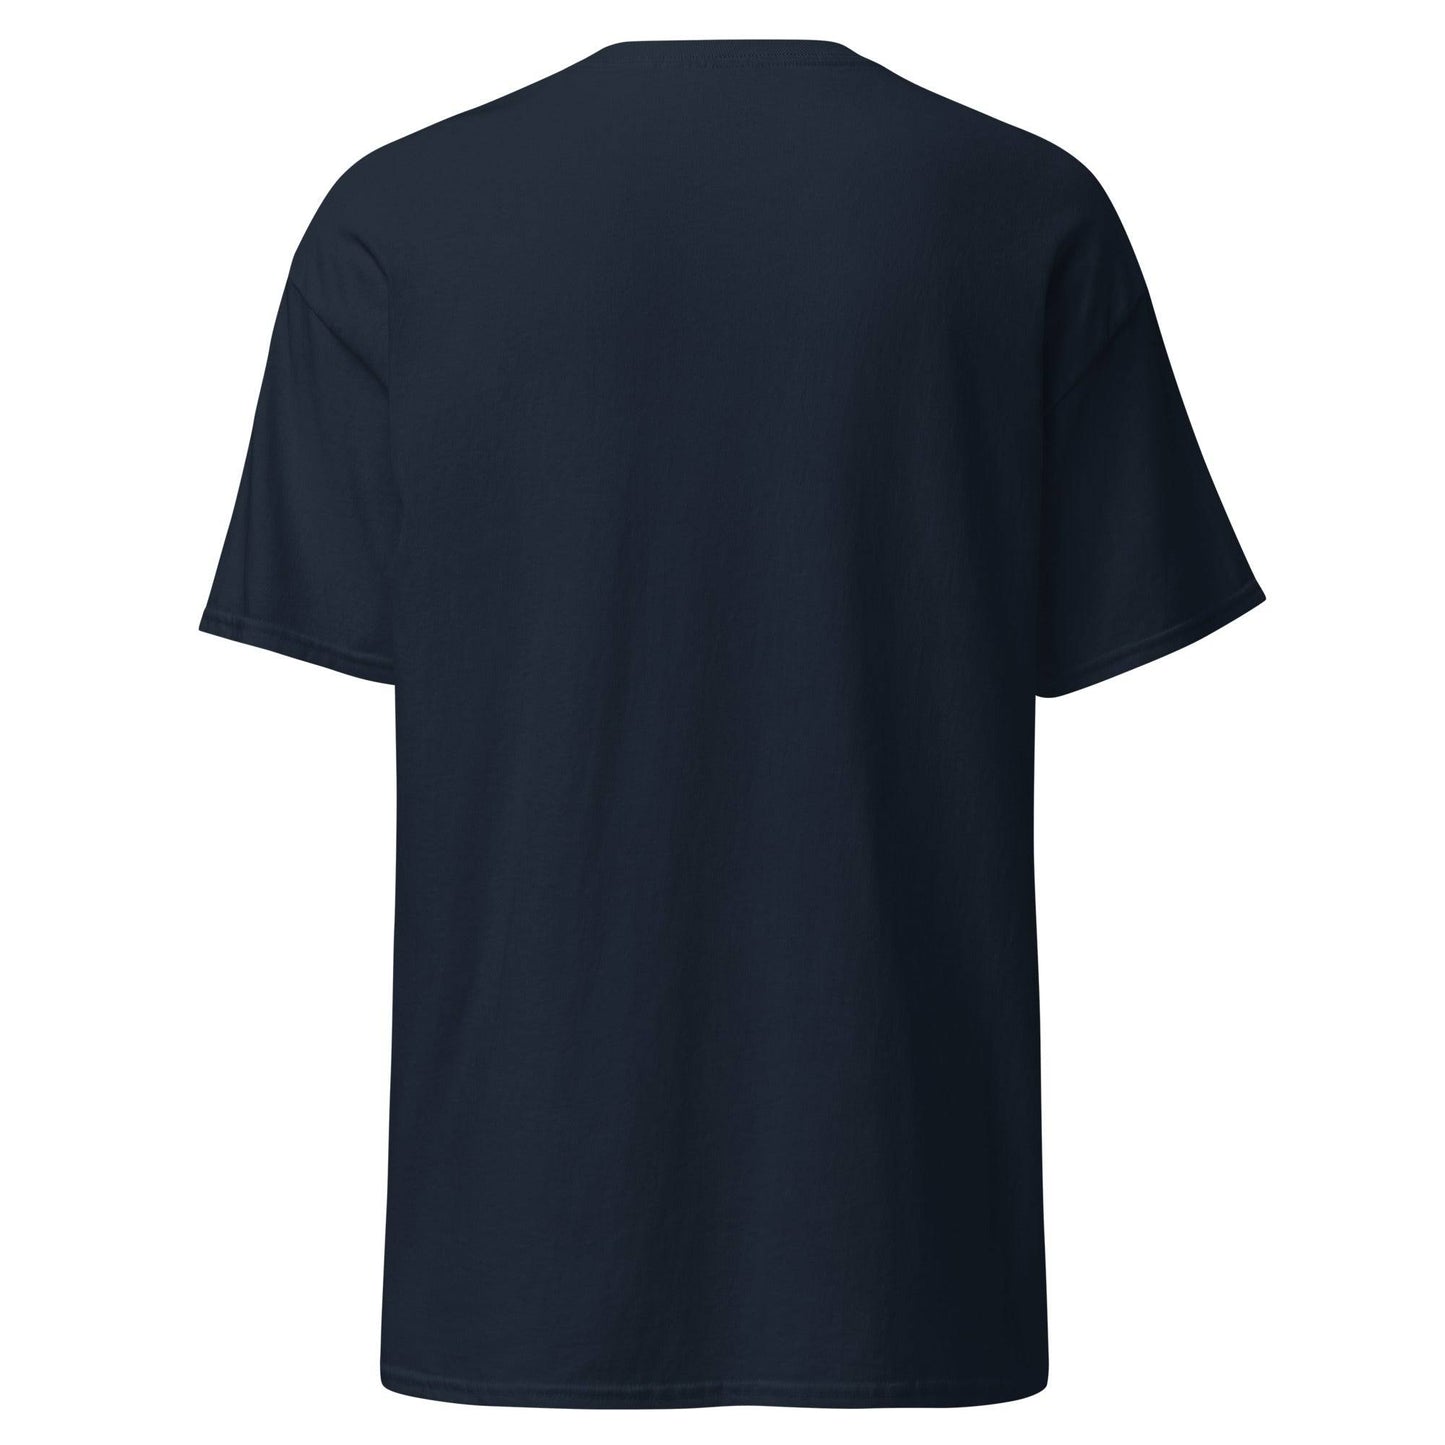 Camiseta navy FC Barcelona equipo fútbol Salid y Disfrutad Johan Cruyff back